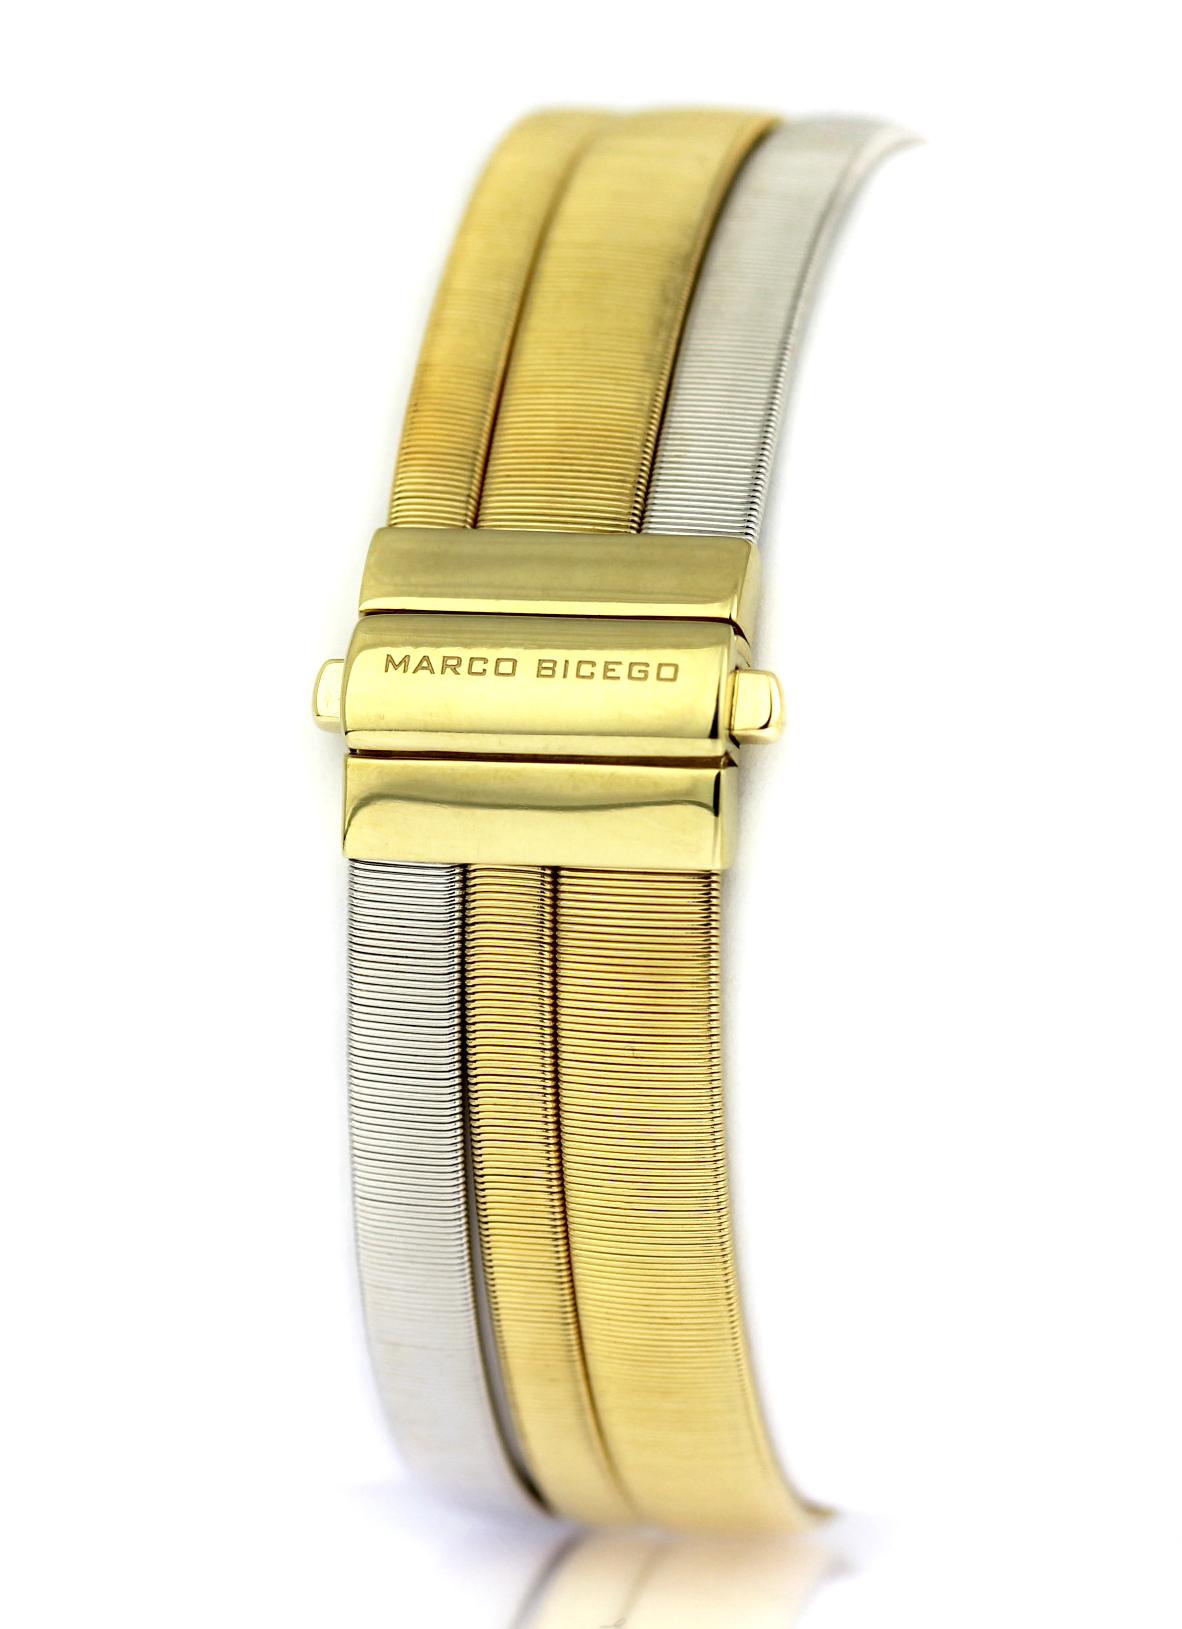 Marco Bicego, bimetal 18 carat yellow and white gold three row/strand crossover bracelet.
